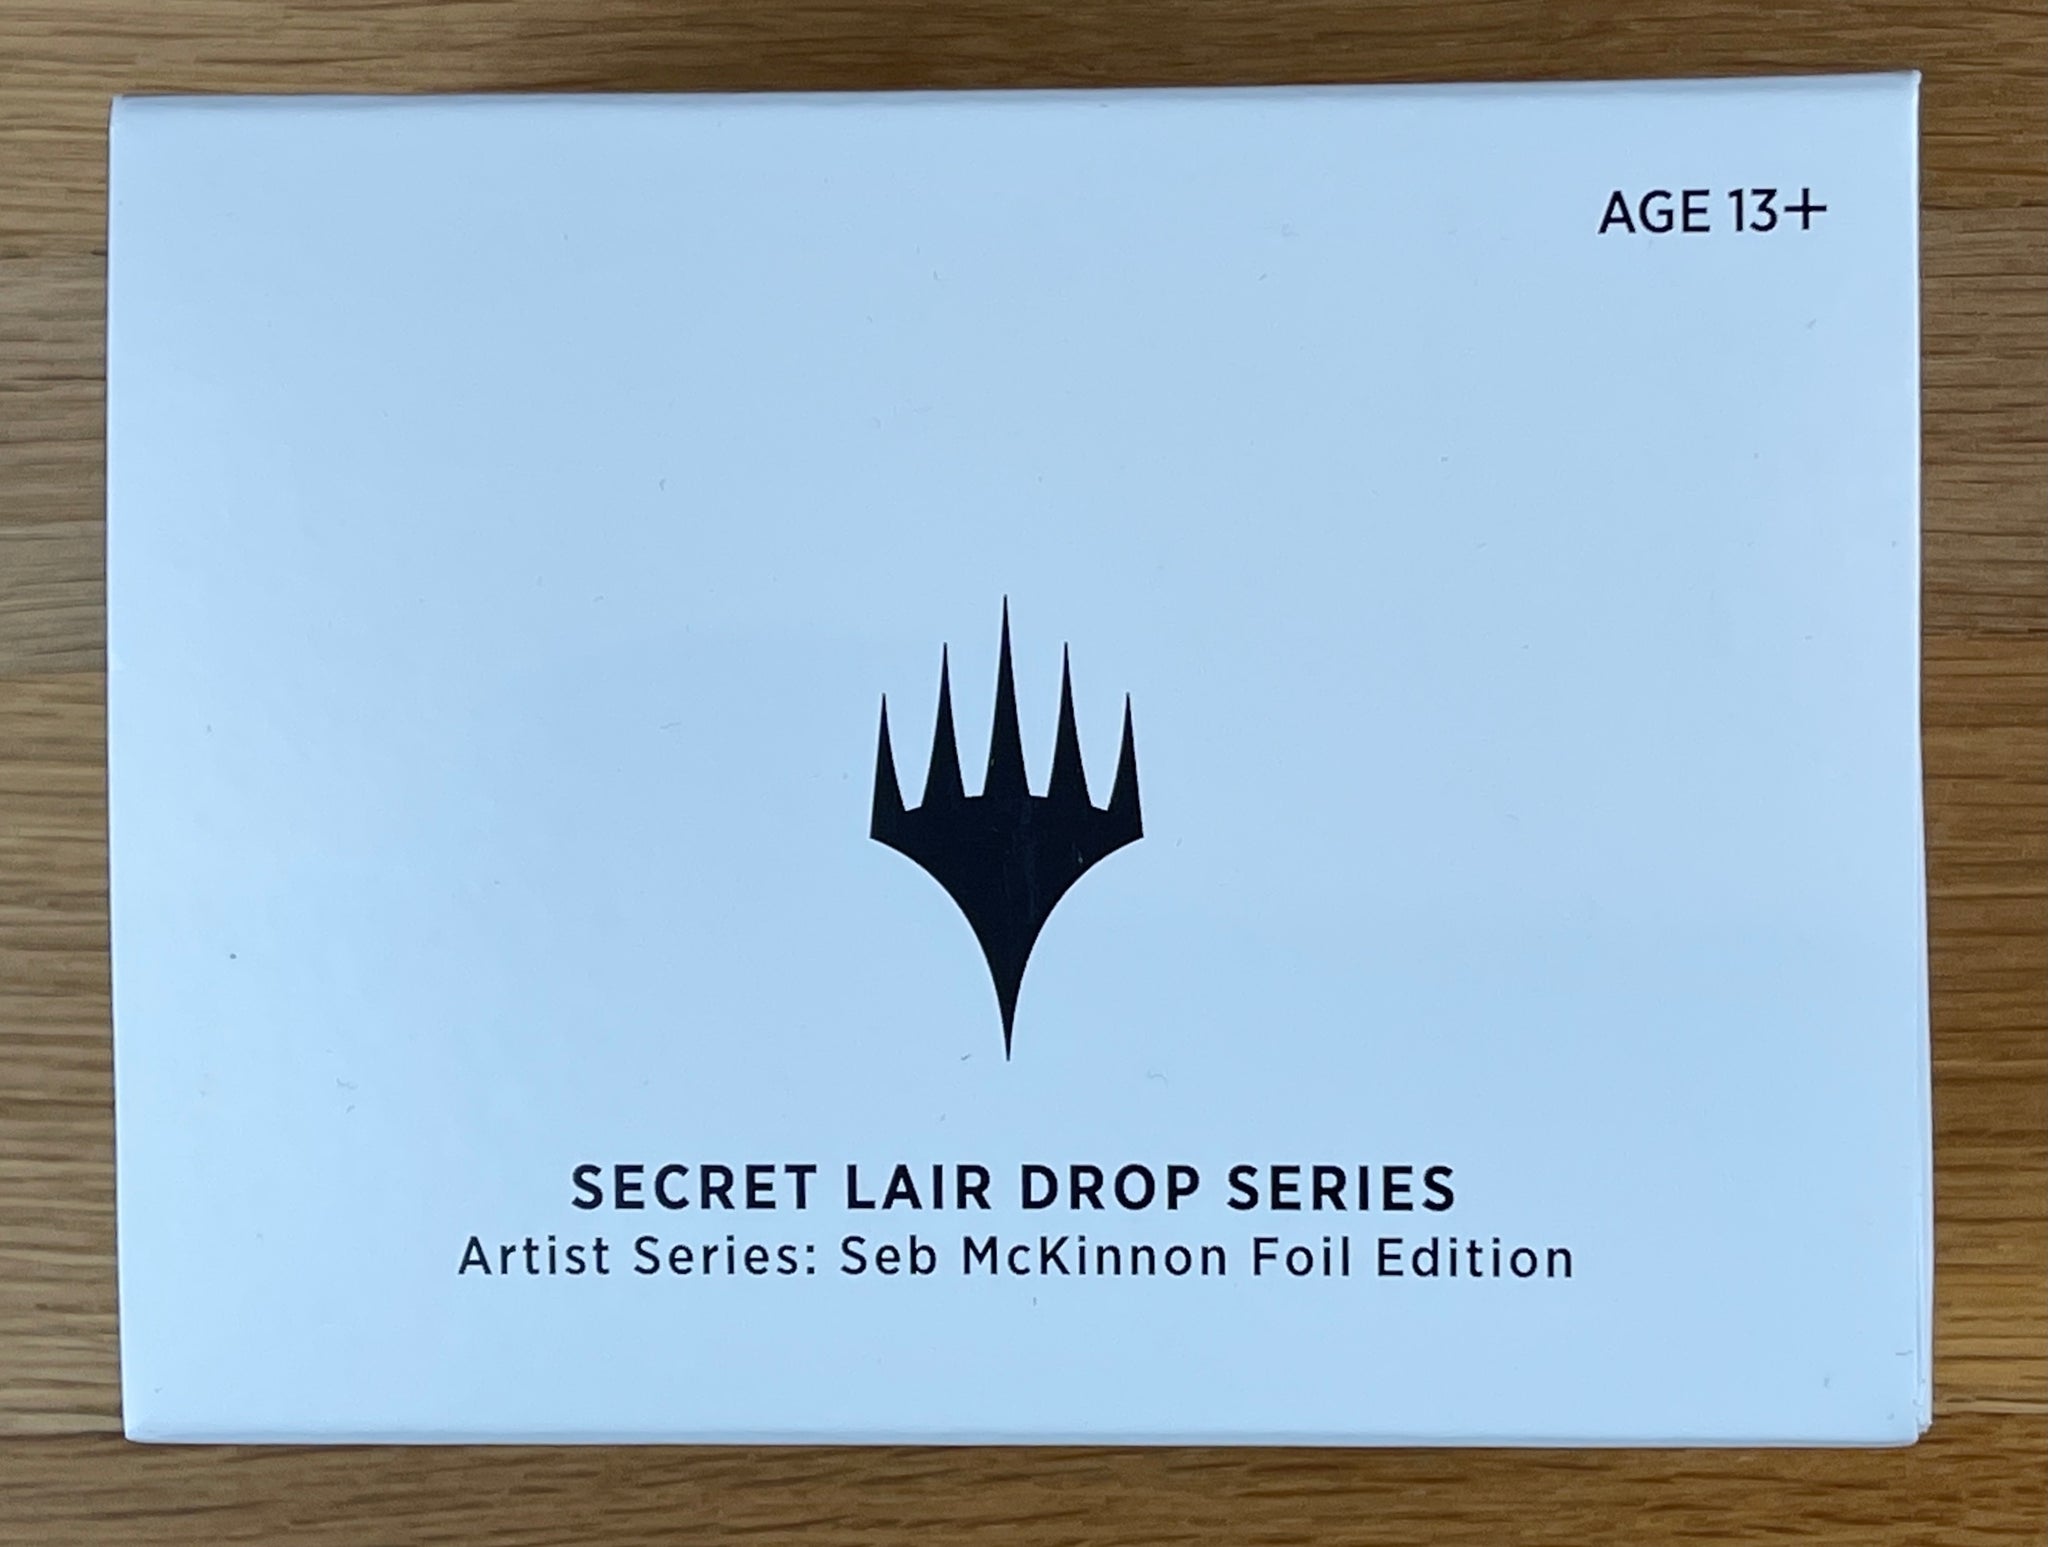 Secret Lair Edition - Artist Series: Seb McKinnon (Foil Edition